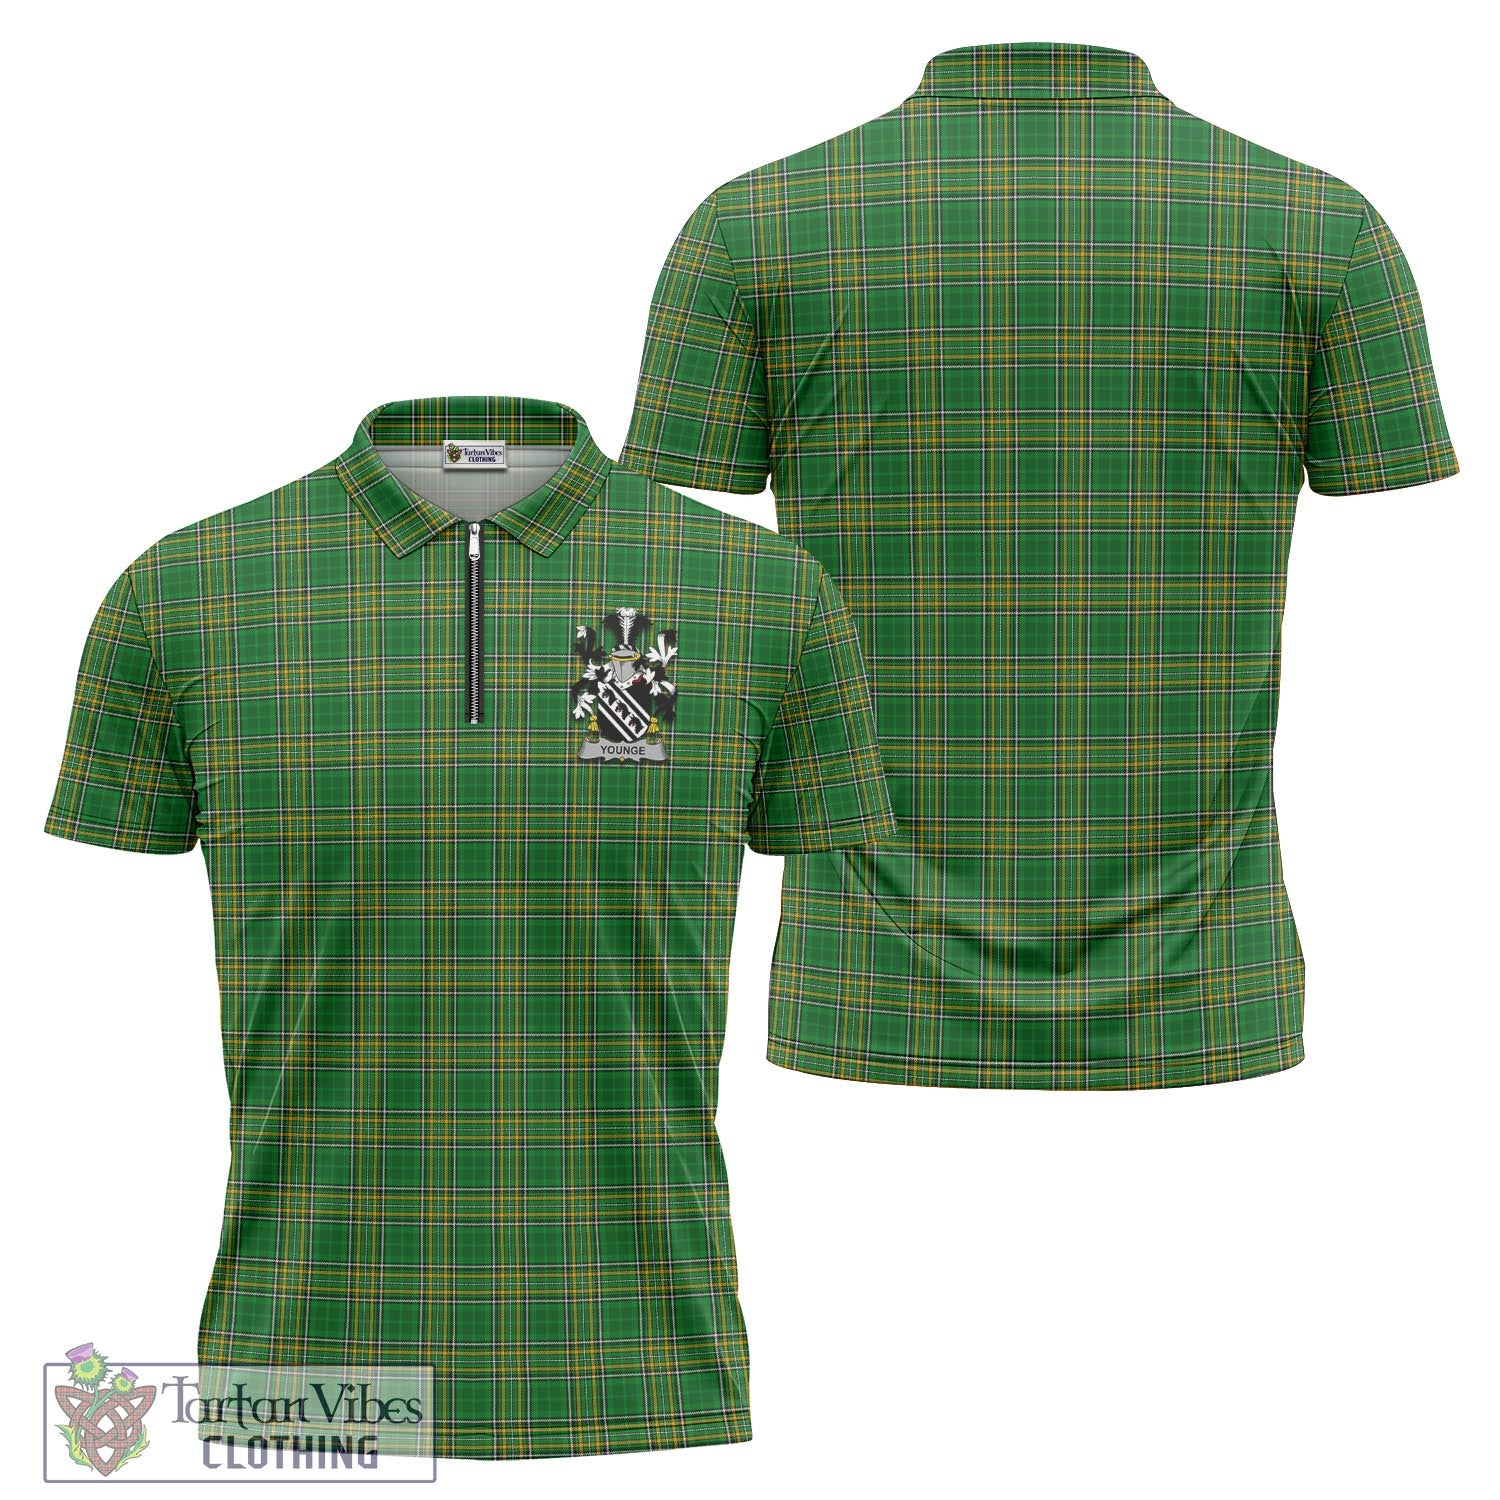 Tartan Vibes Clothing Younge Ireland Clan Tartan Zipper Polo Shirt with Coat of Arms